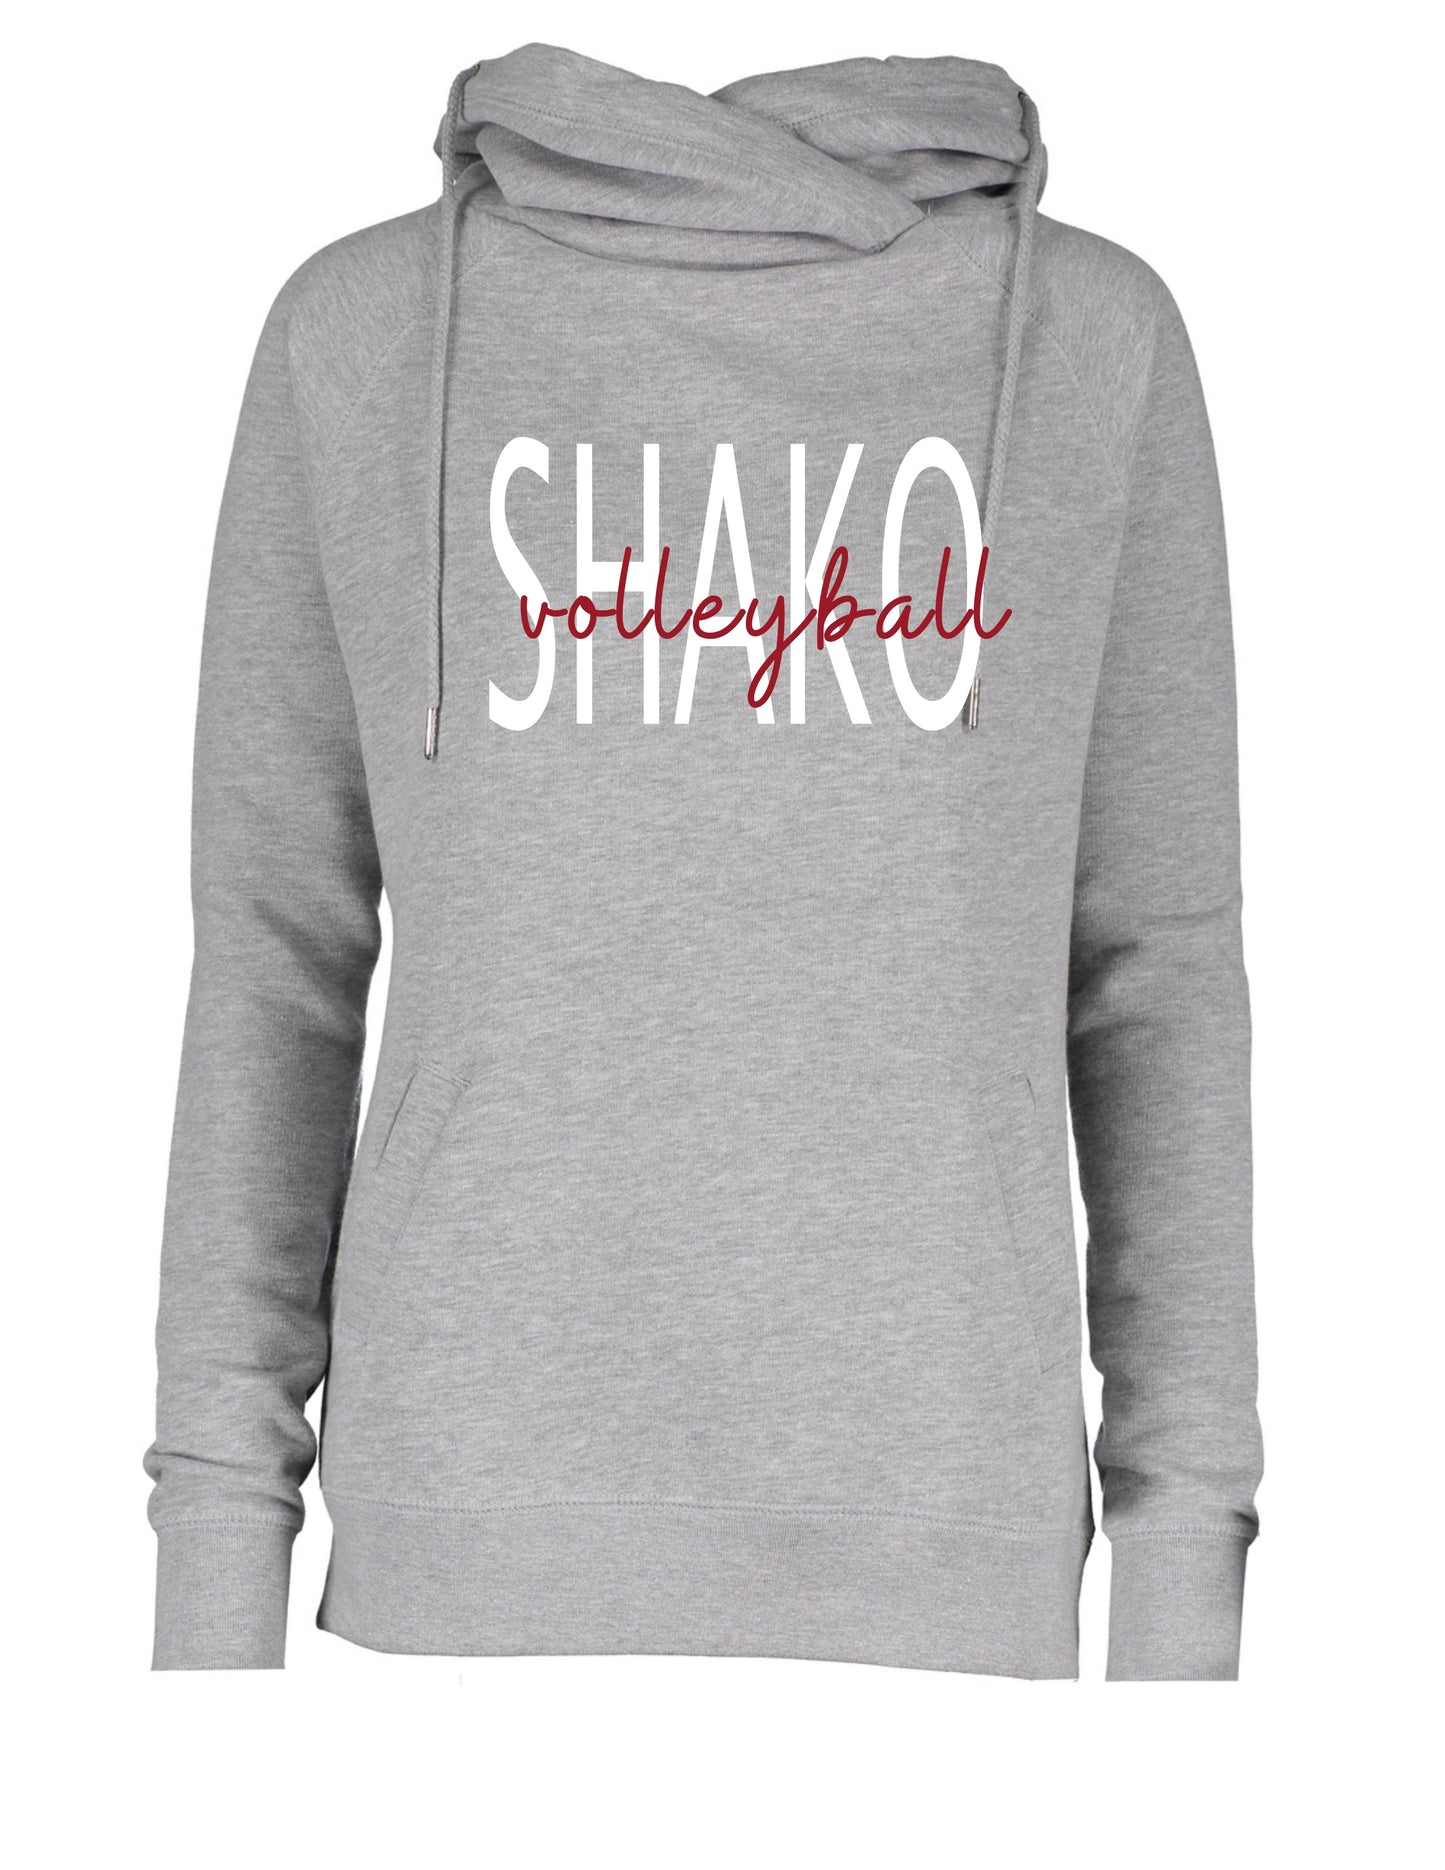 Shakopee volleyball Cowl Neck. Shako volleyball sweatshirt